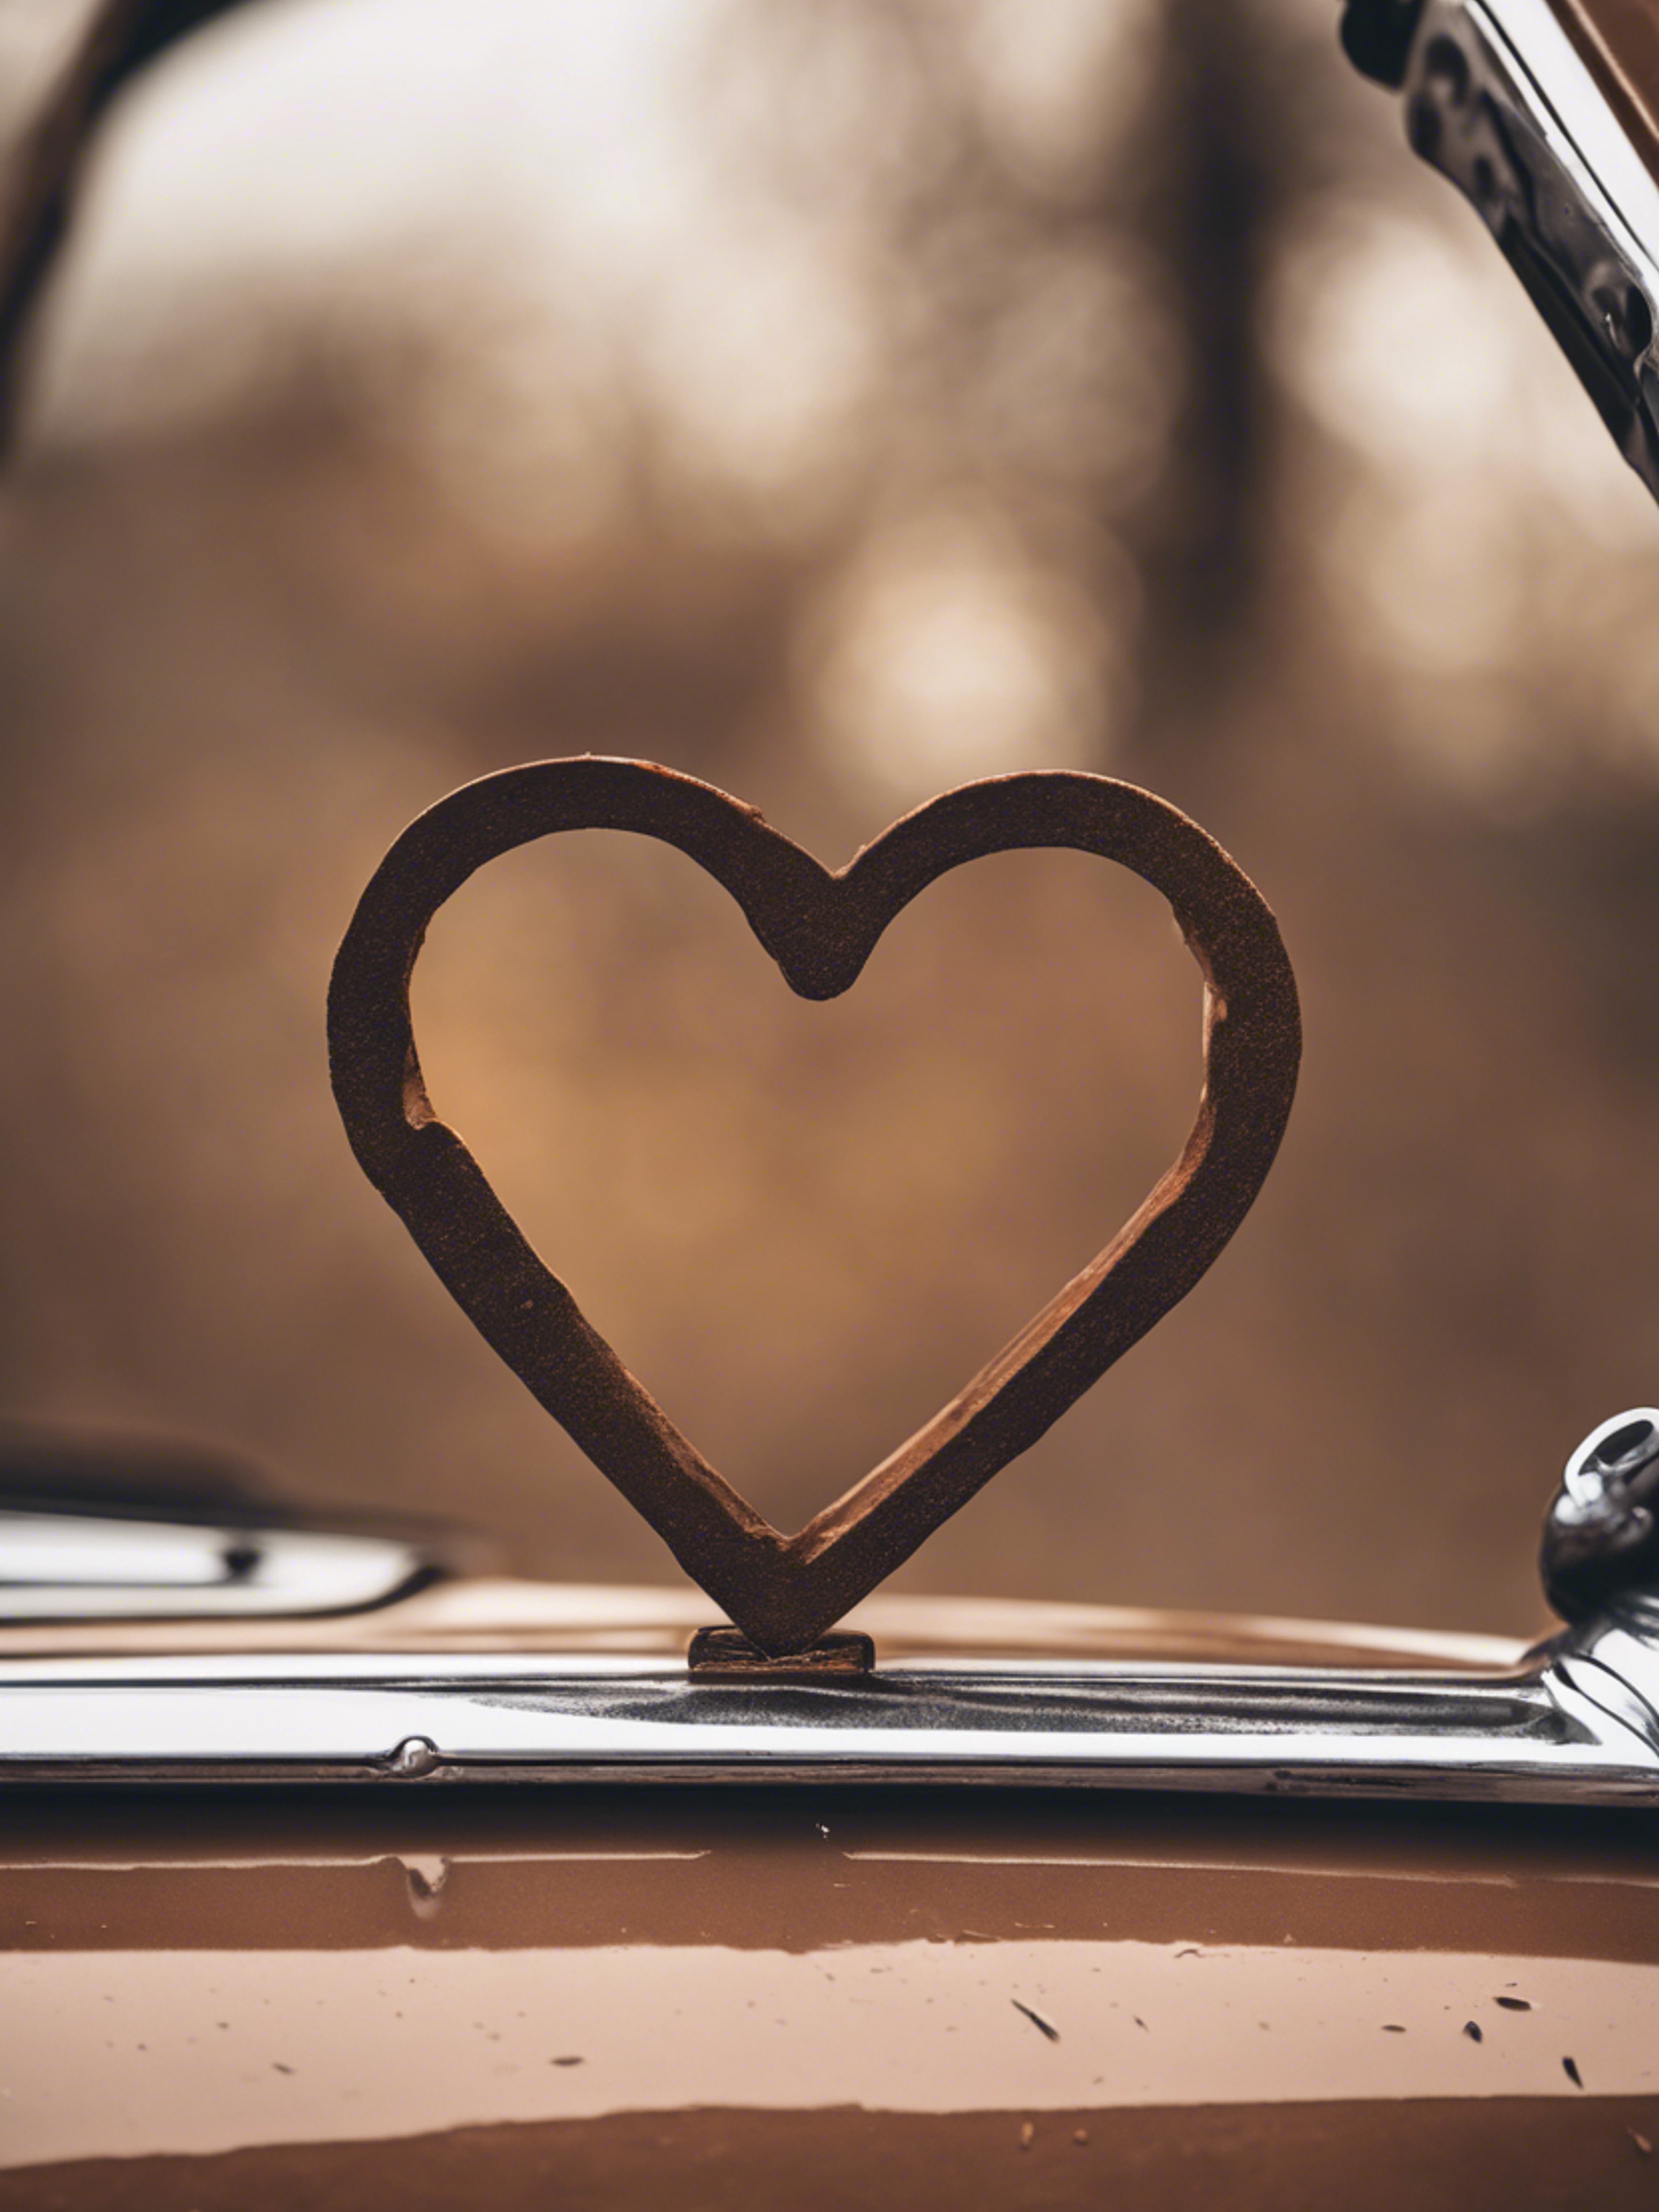 A brown heart symbol sticker on the back of a rusty vintage car.壁紙[4d384f66b29f431b9703]